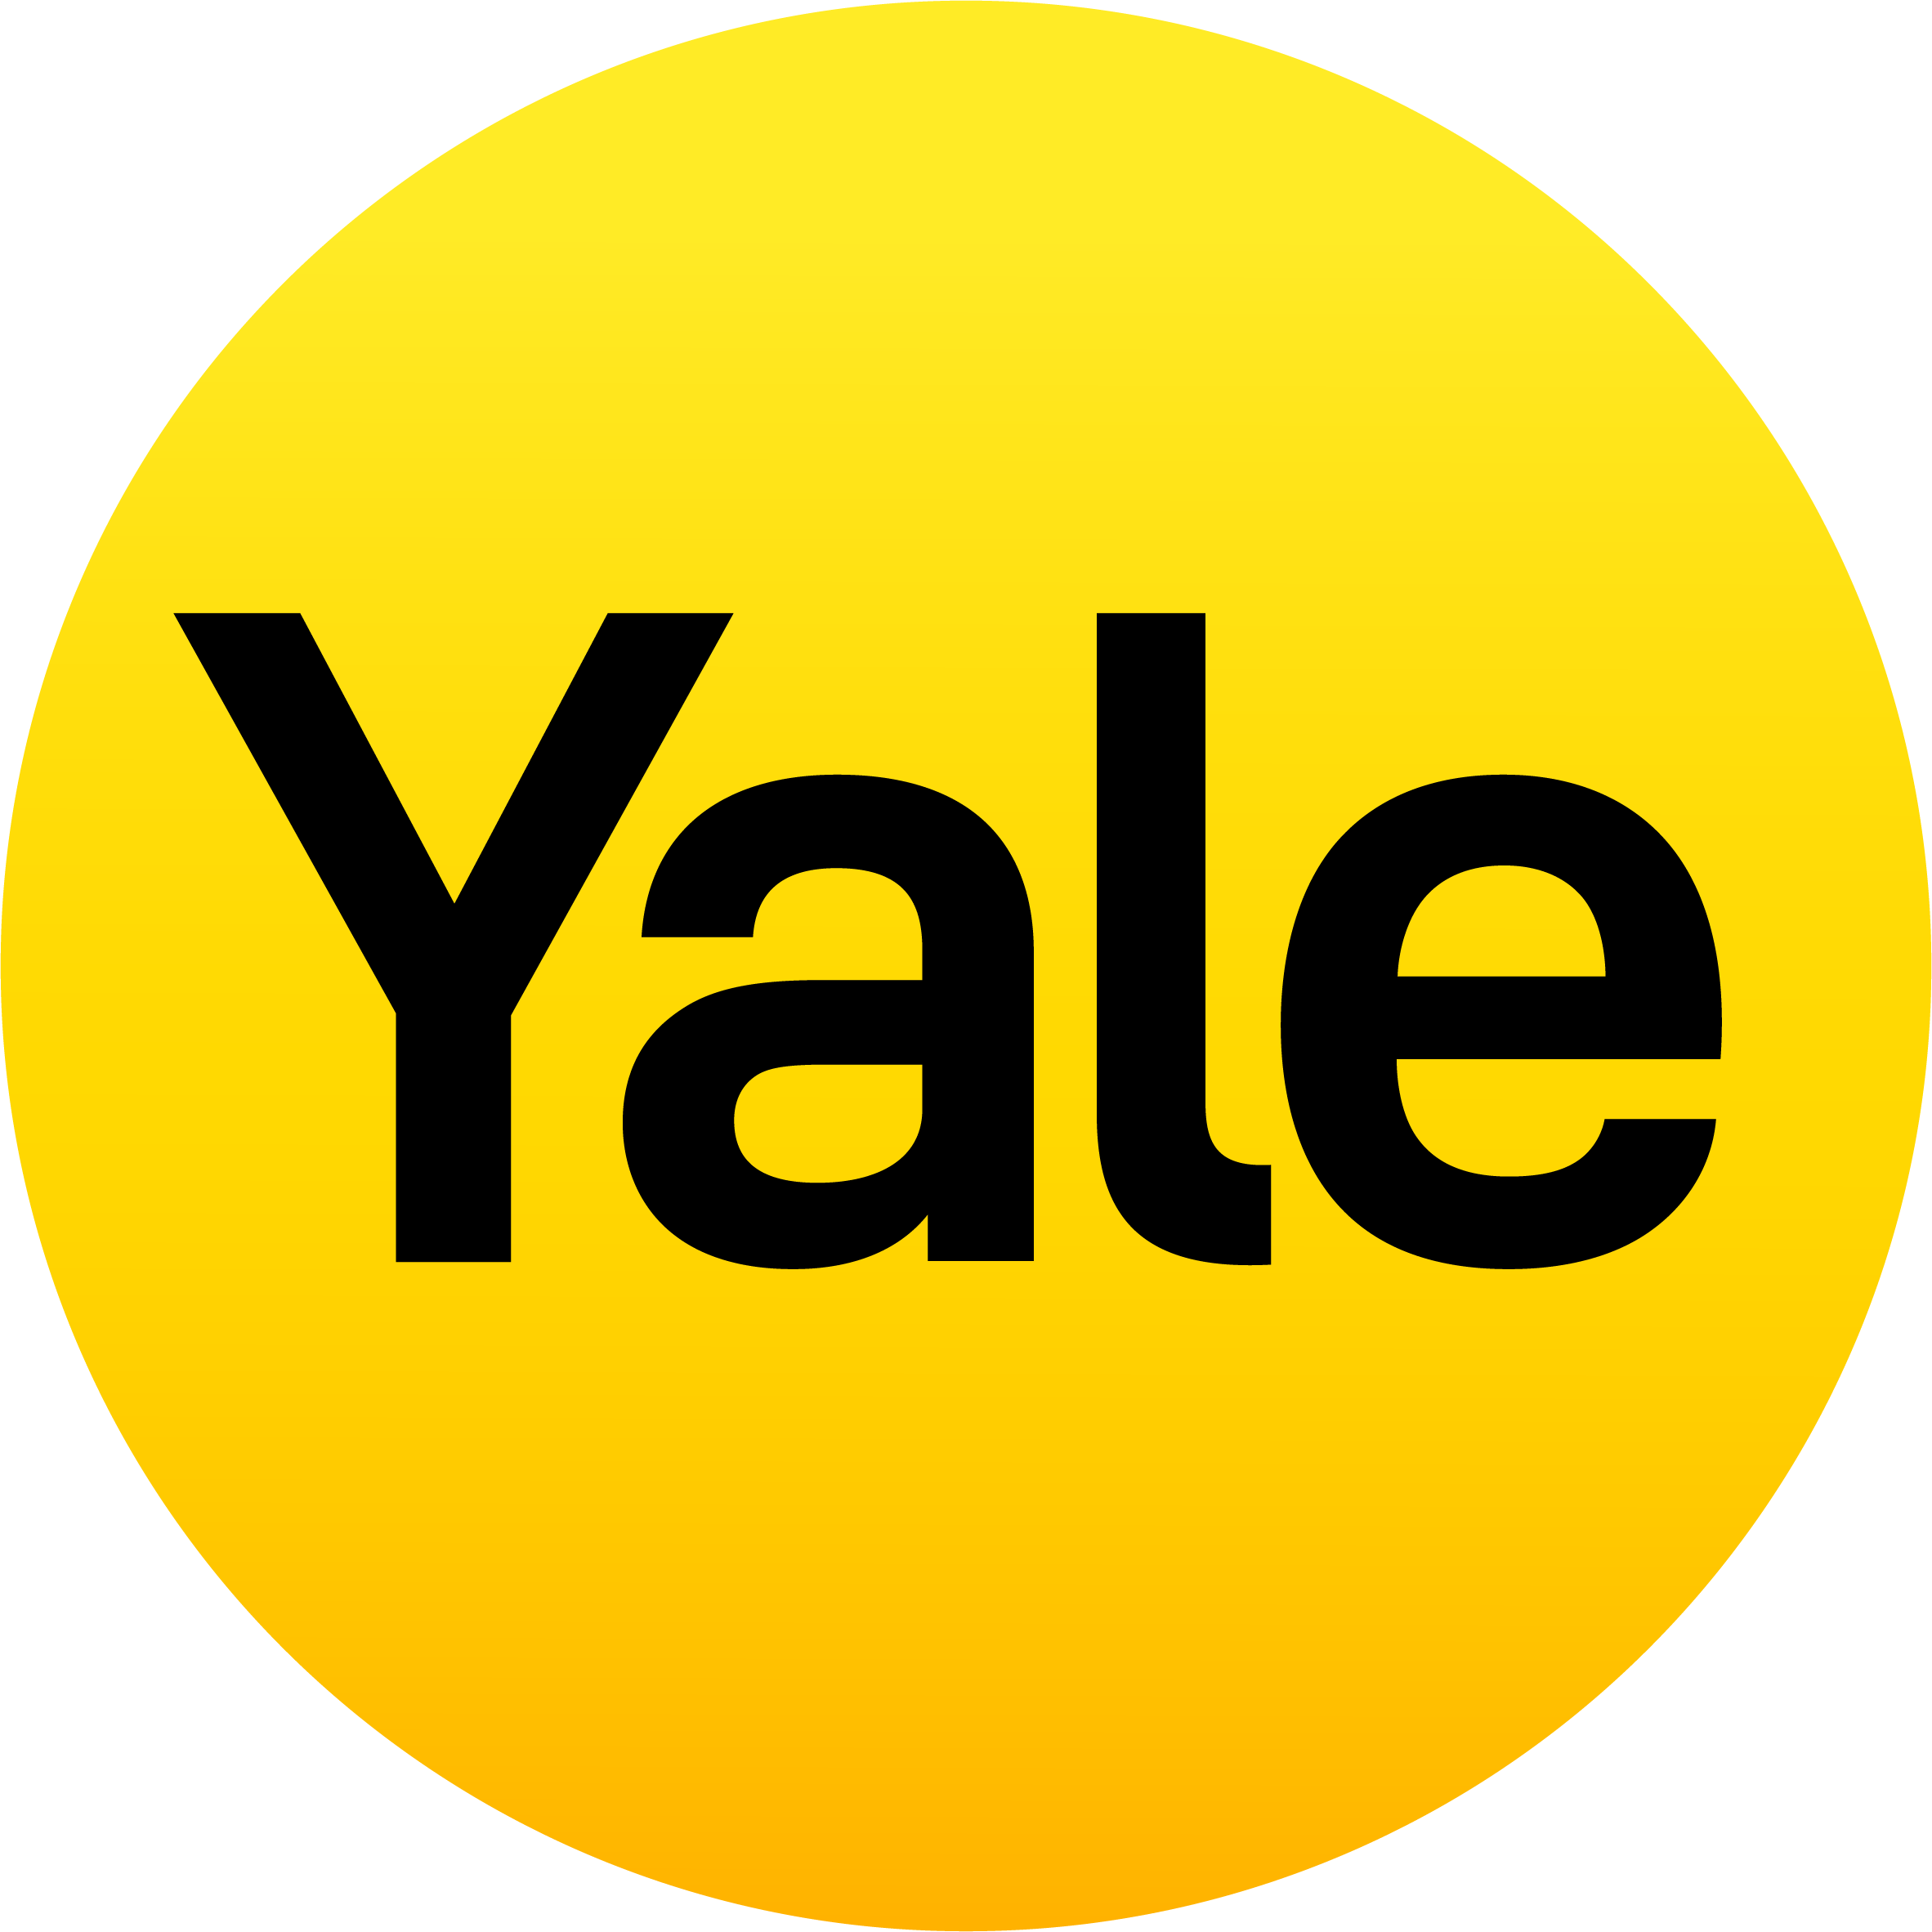 Yale_Logo_Primary_RGB